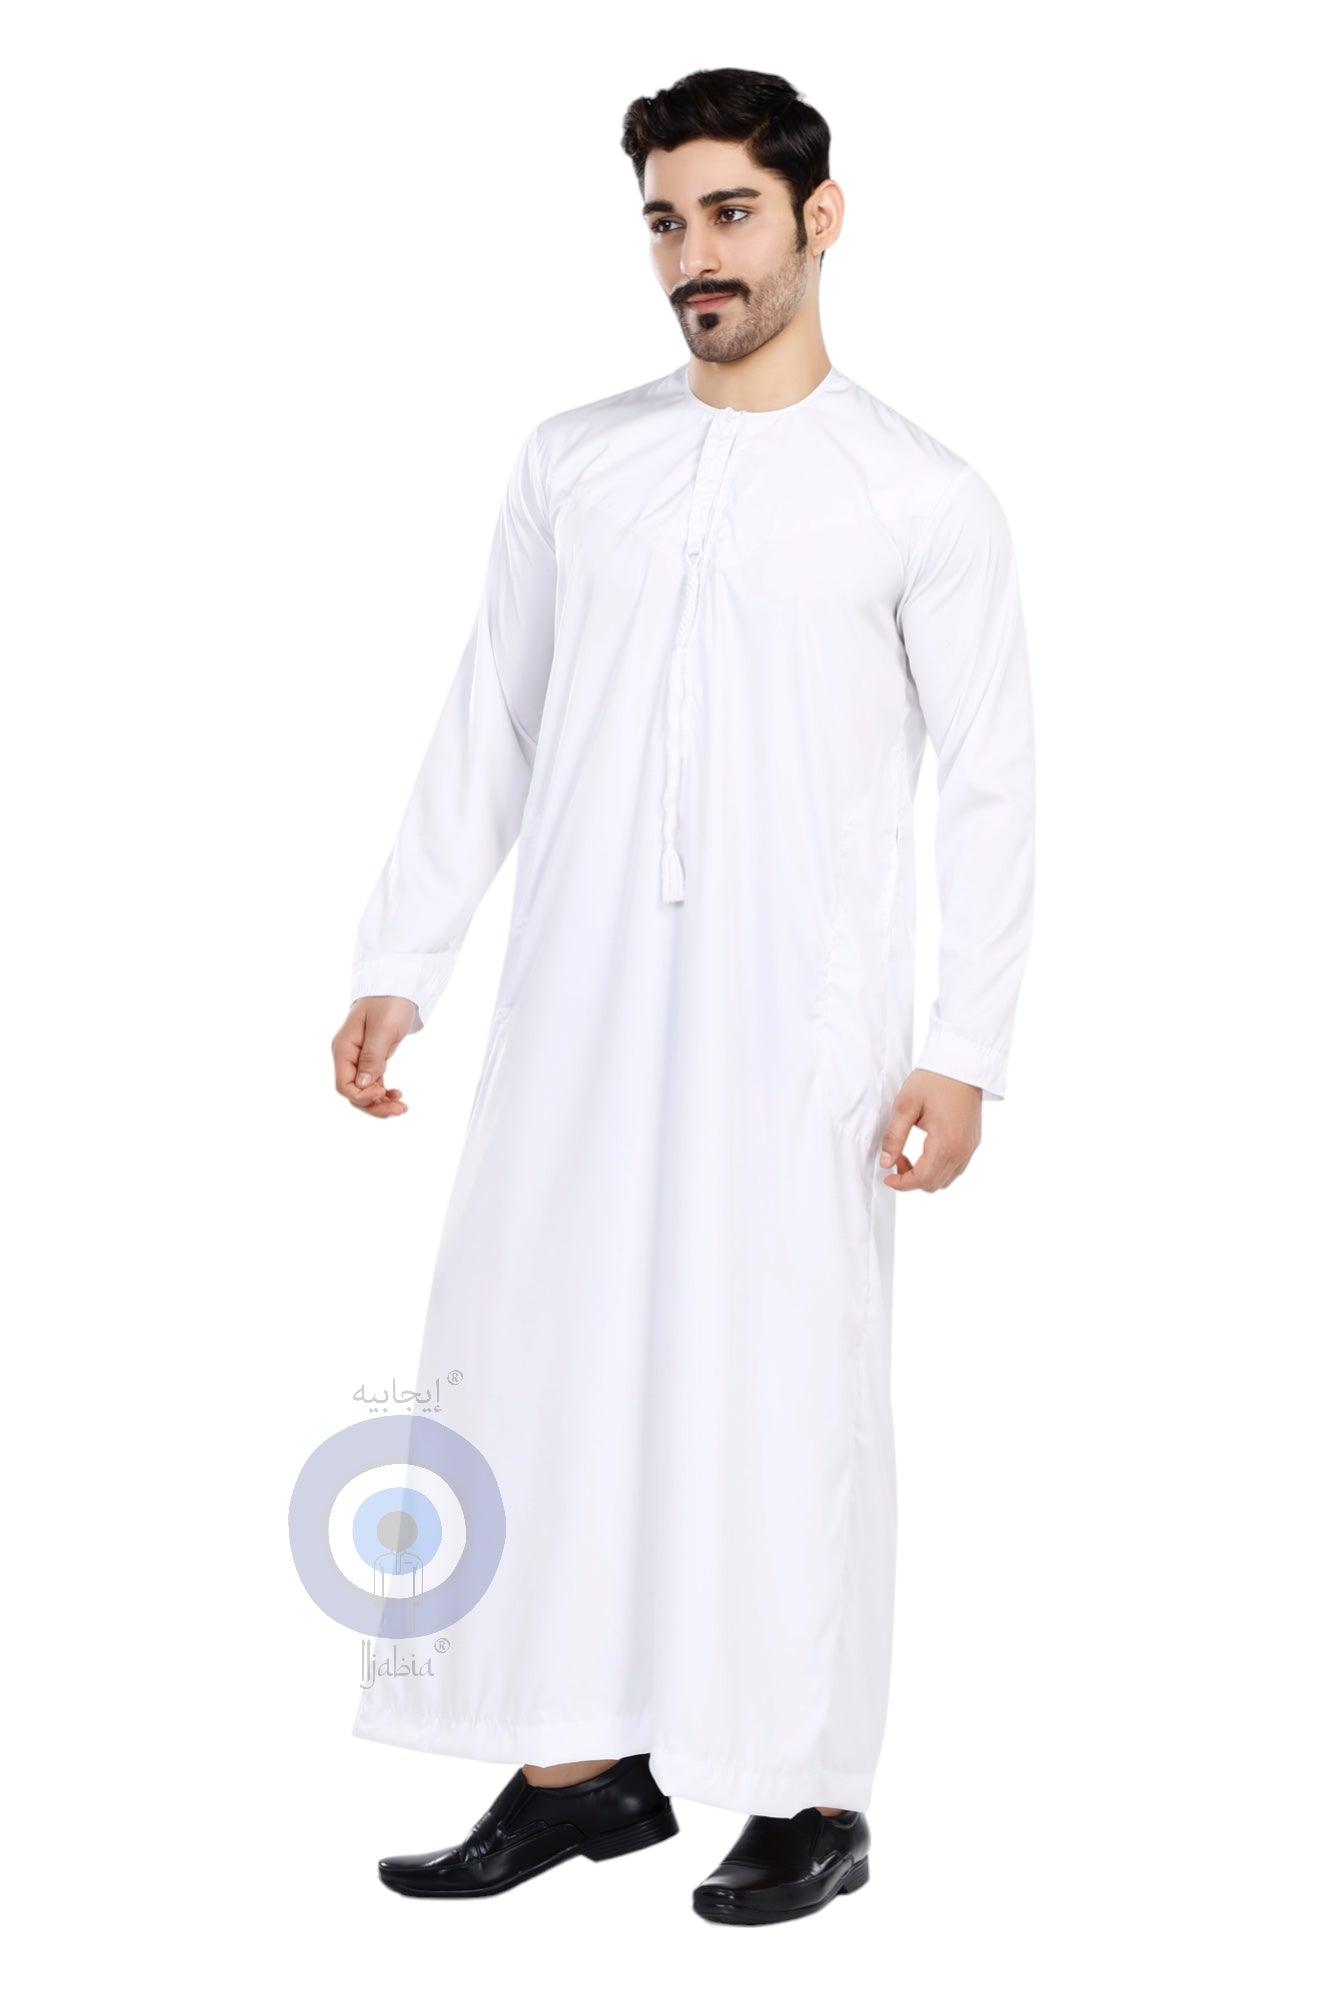 Imported Vietnam Fabric Emirati Mens Omani Thobe - Full Sleeves - White - IIJABIA